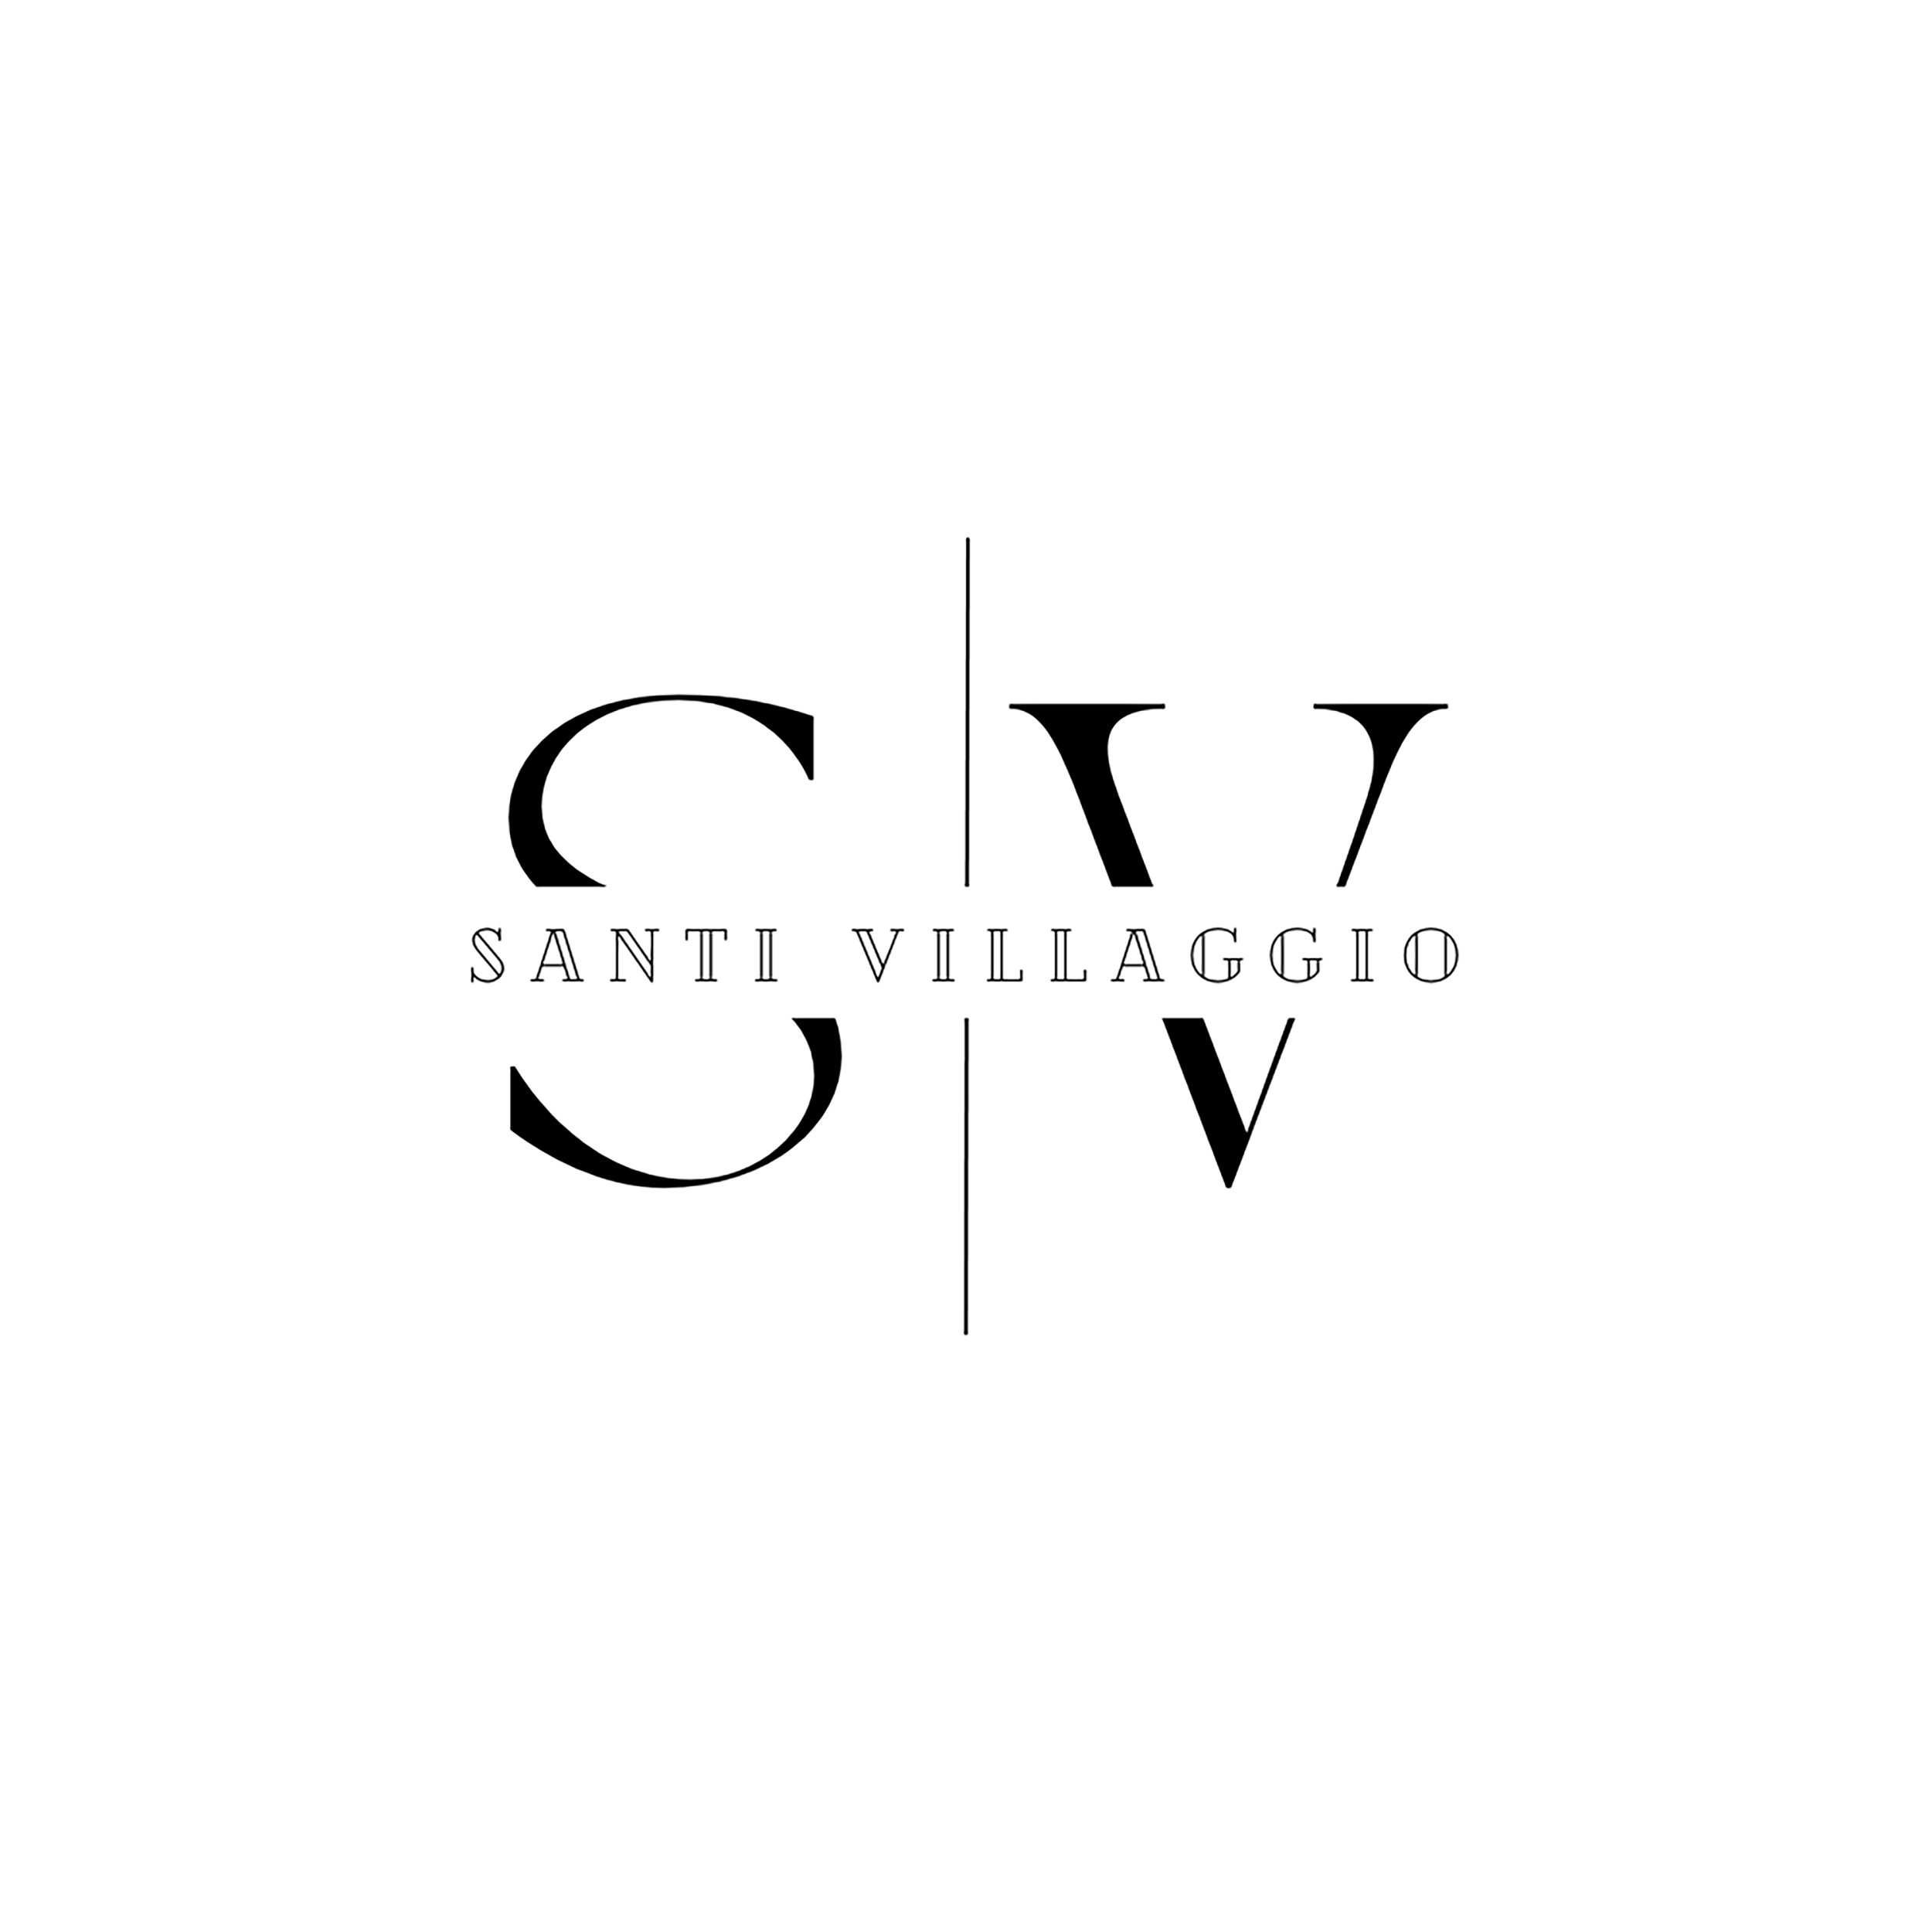 Santi Villaggio